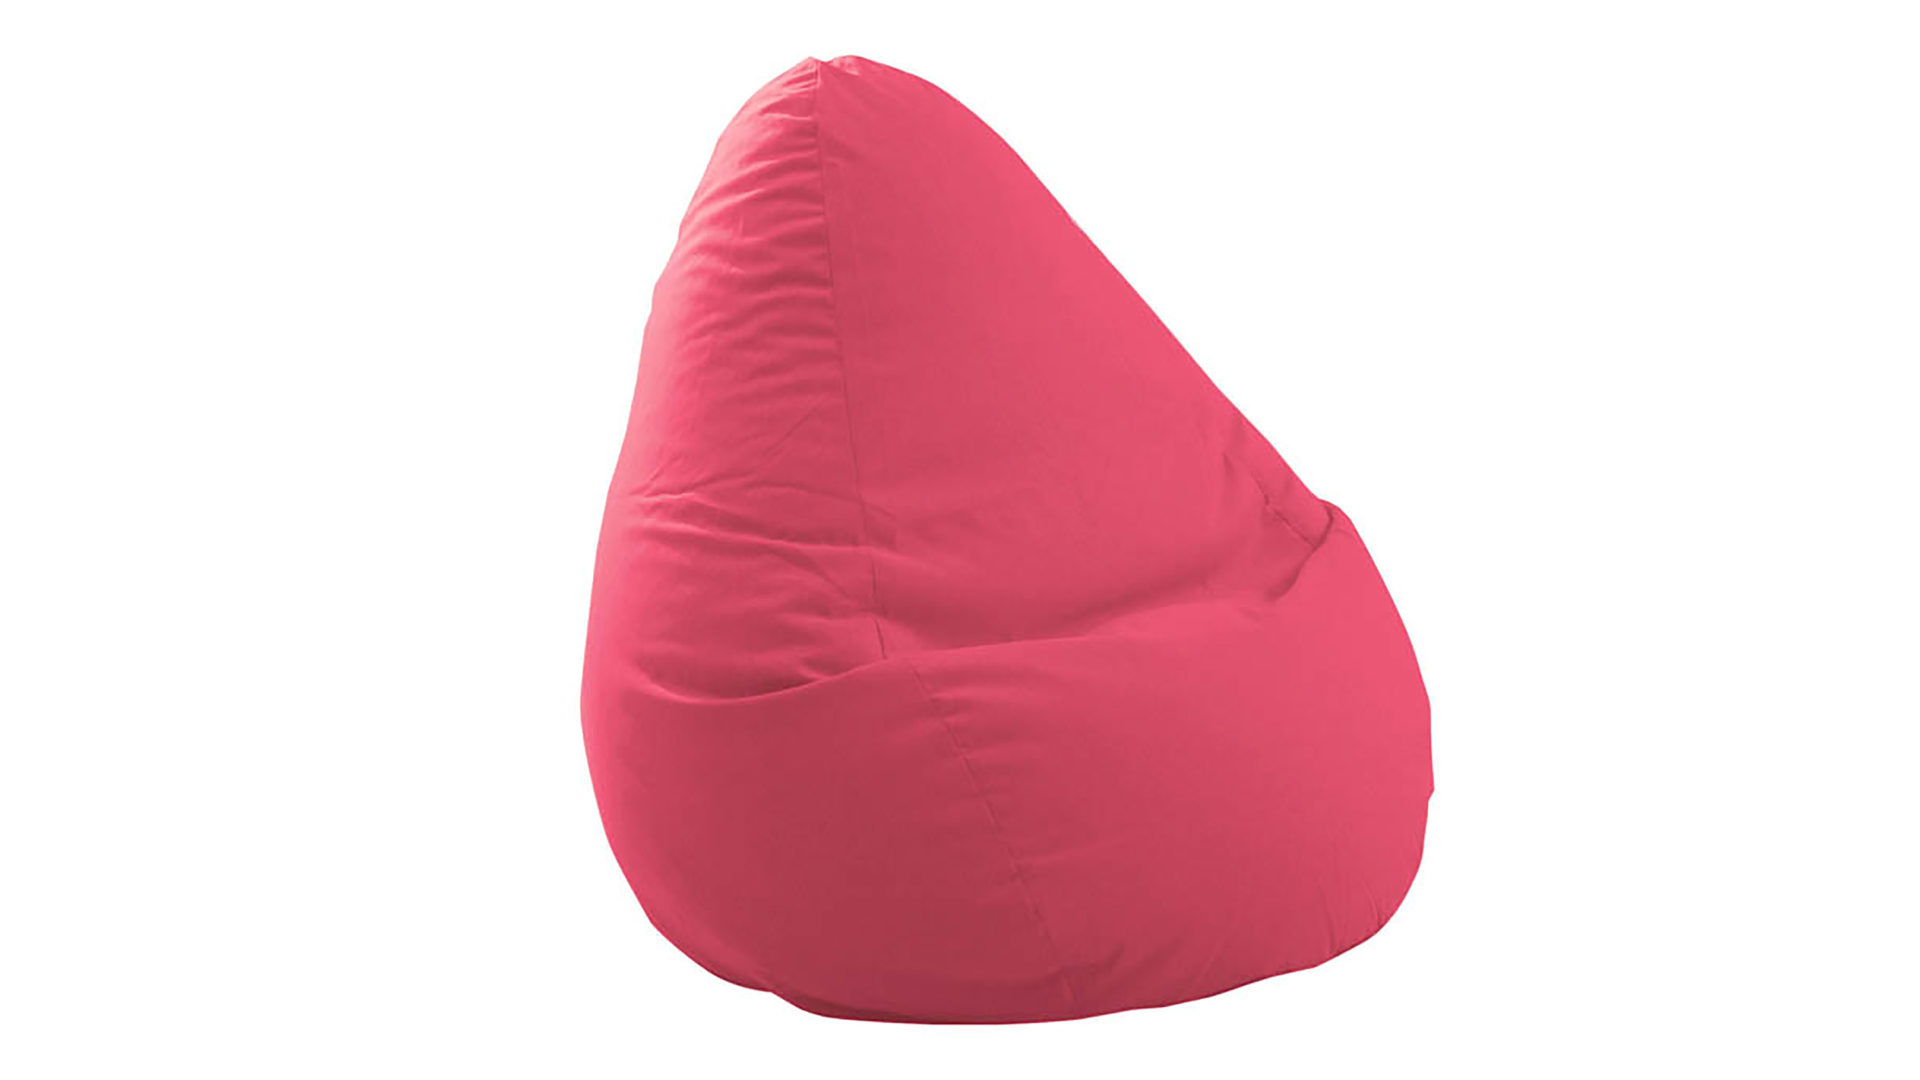 Standard-Sitzsack Magma sitting point aus Stoff in Pink SITTING POINT Sitzsack Easy L als praktisches Kleinmöbel pinker Mikrofaserbezug - ca. 120 Liter